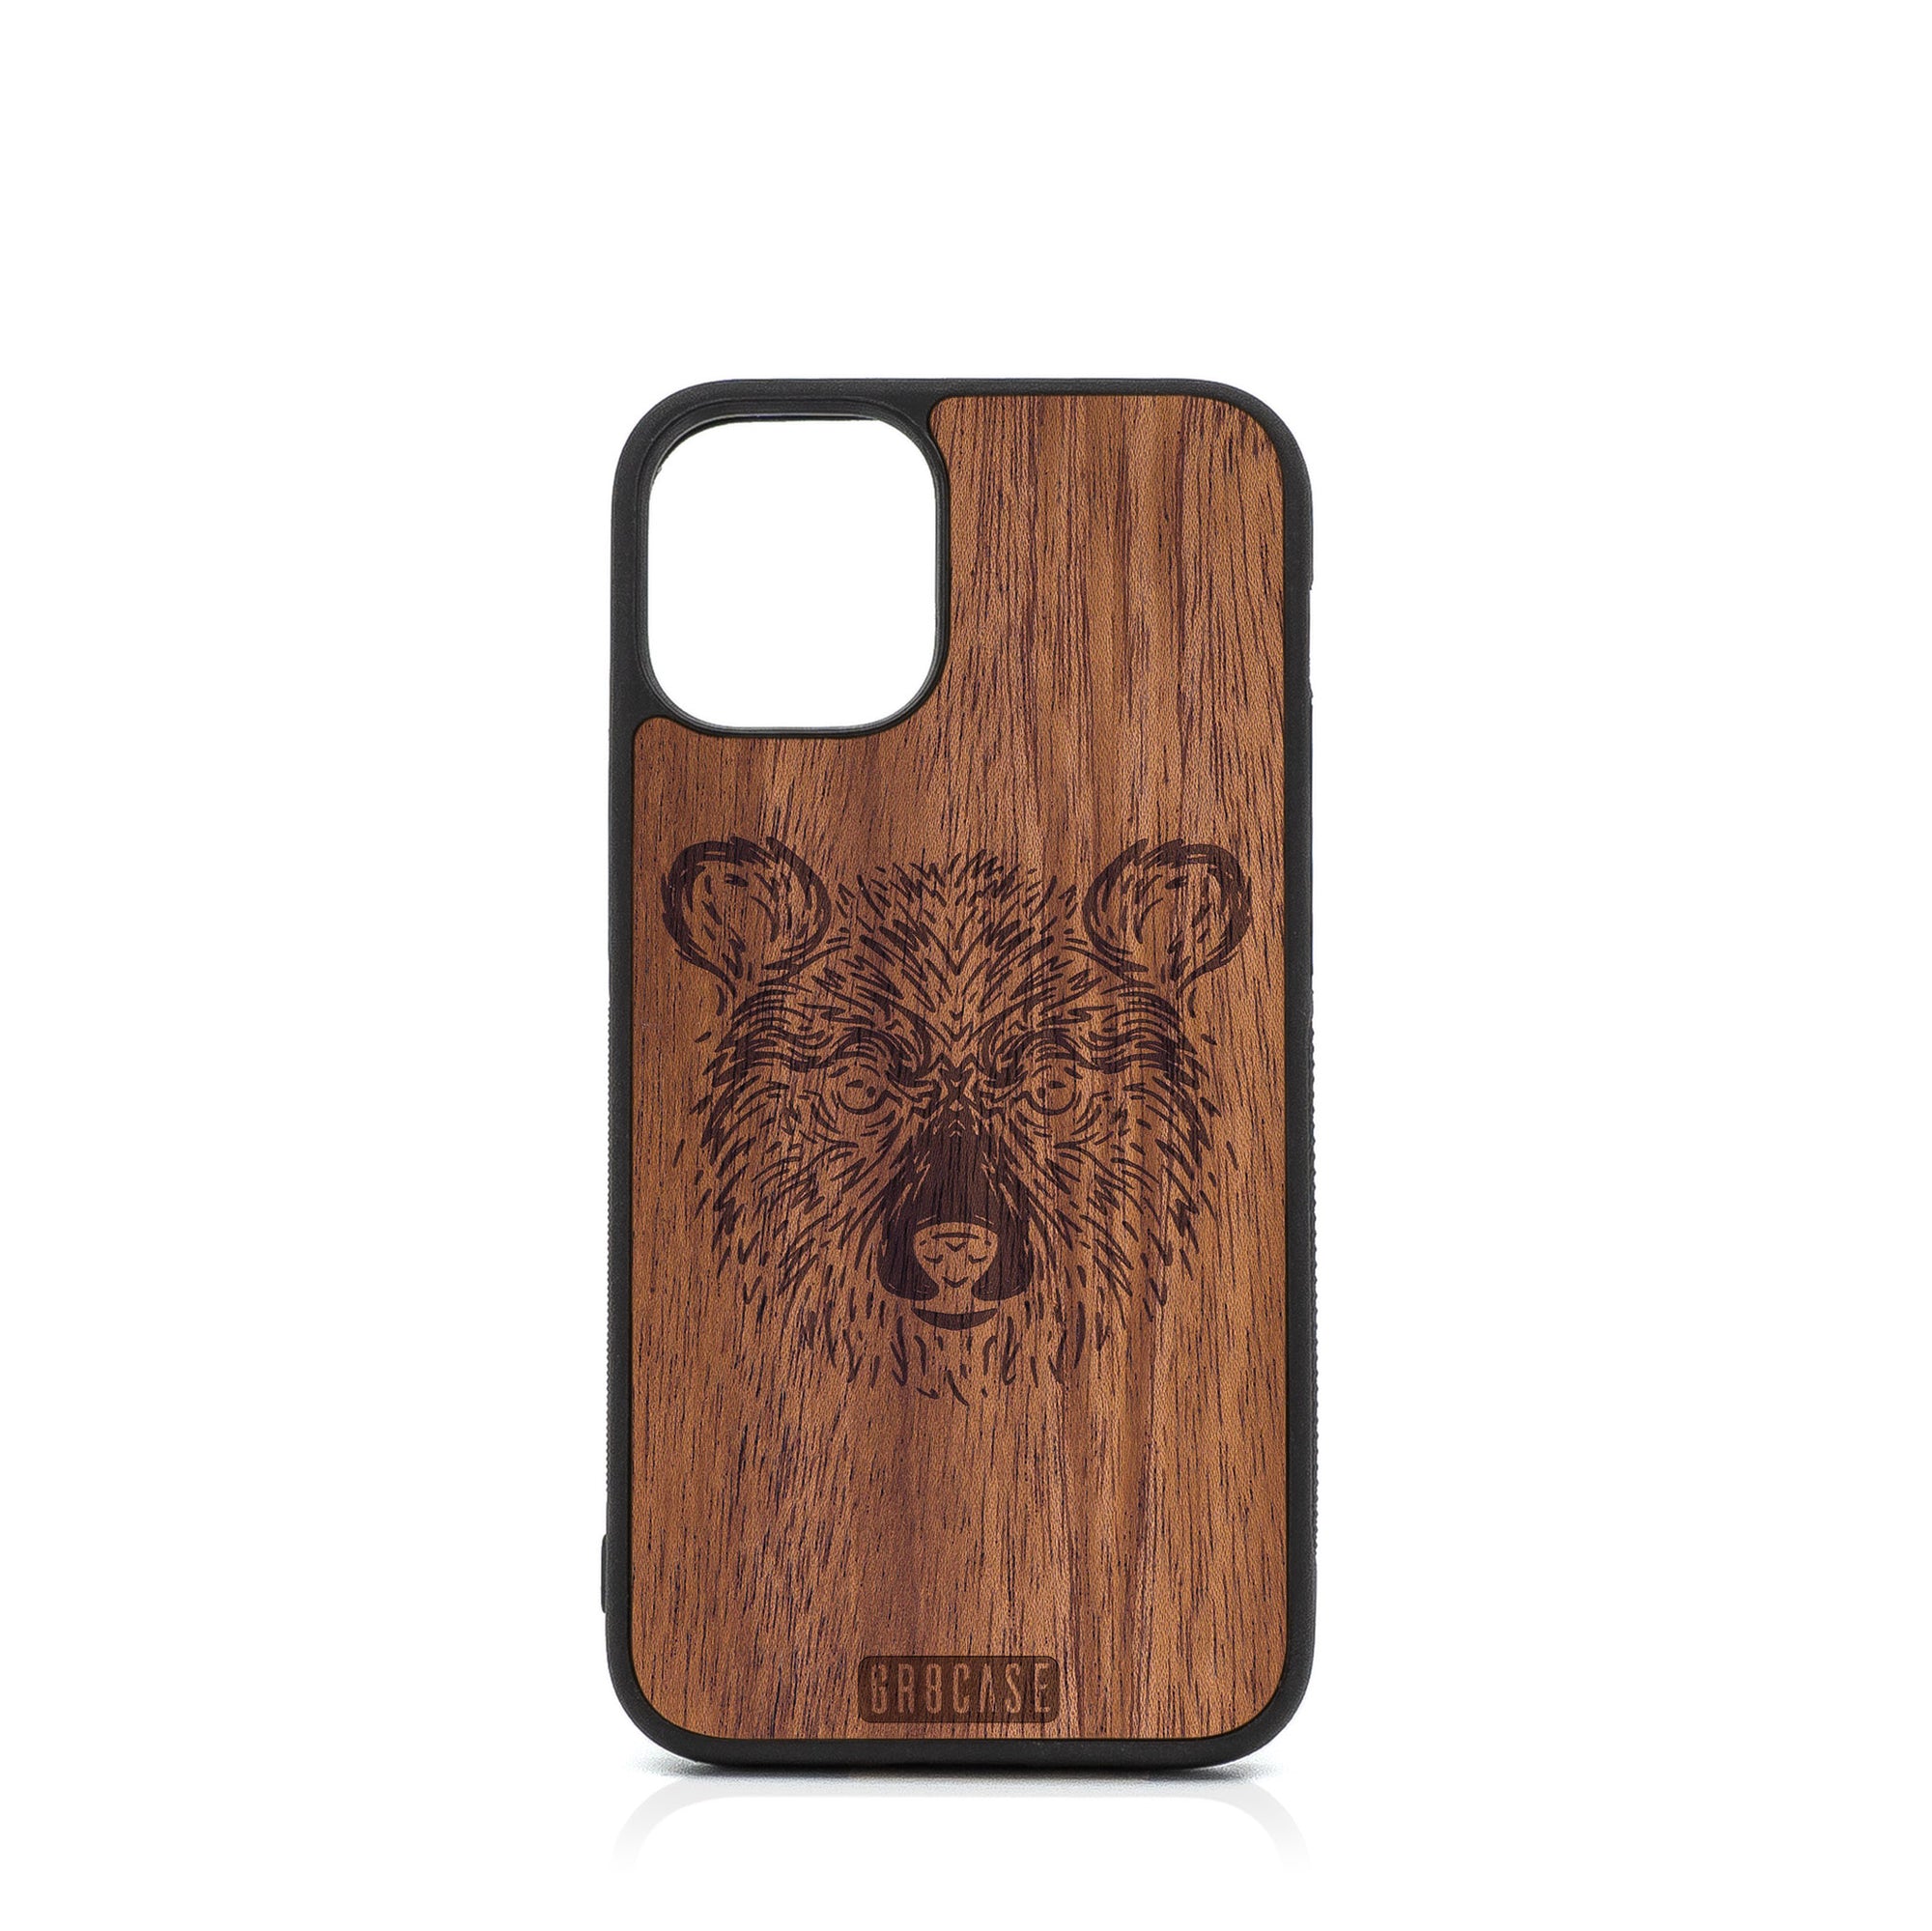 Furry Bear Design Wood Case For iPhone 12 Mini